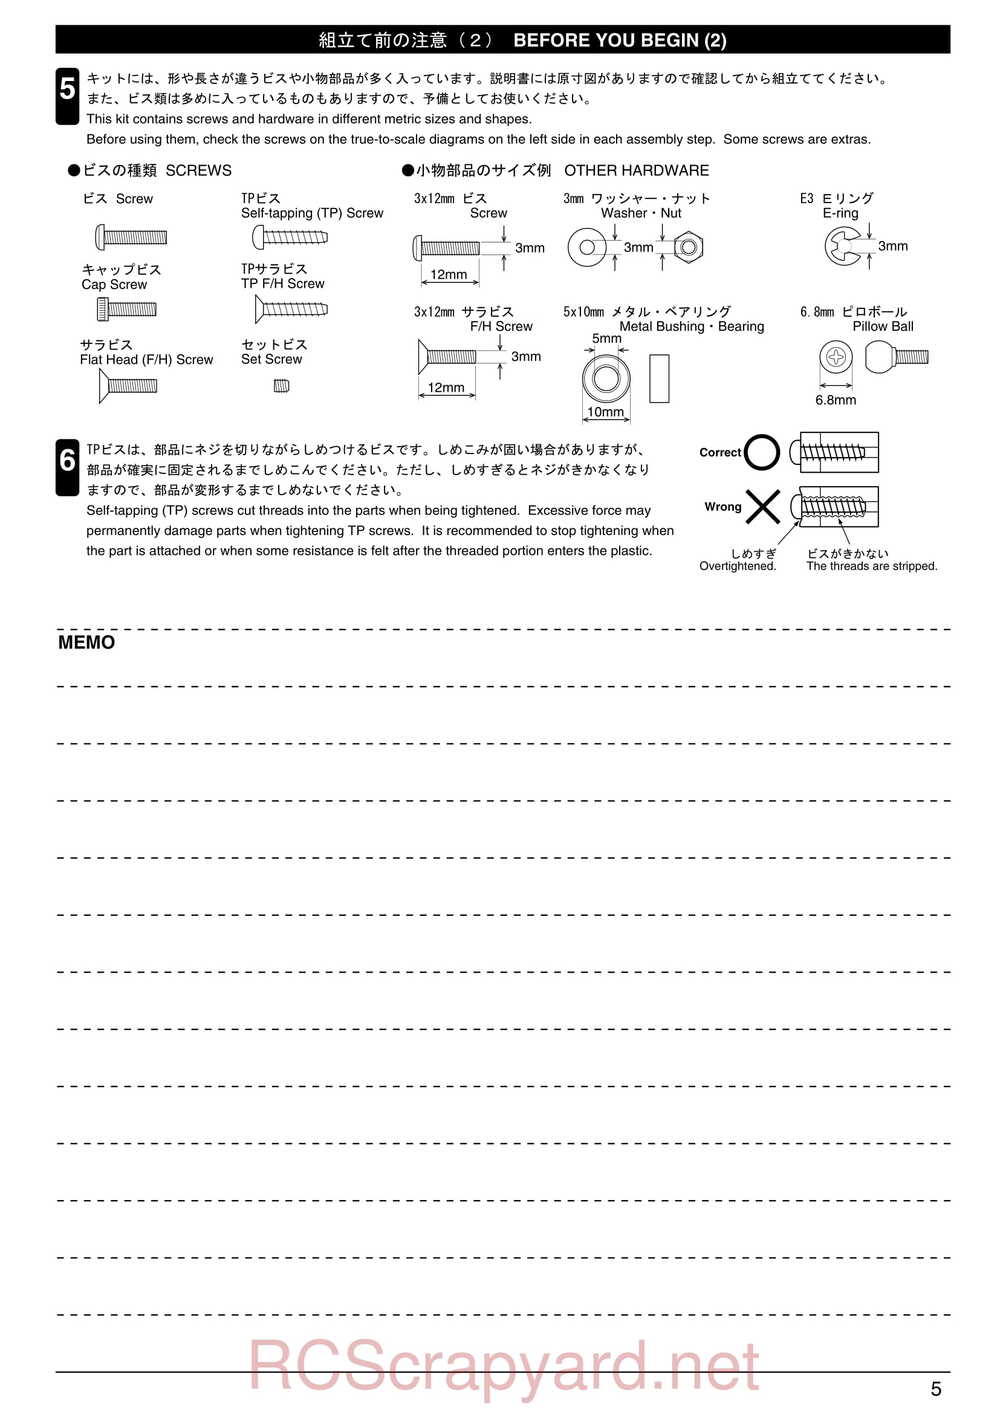 Kyosho - 30521b - Twin-Force - Manual - Page 05